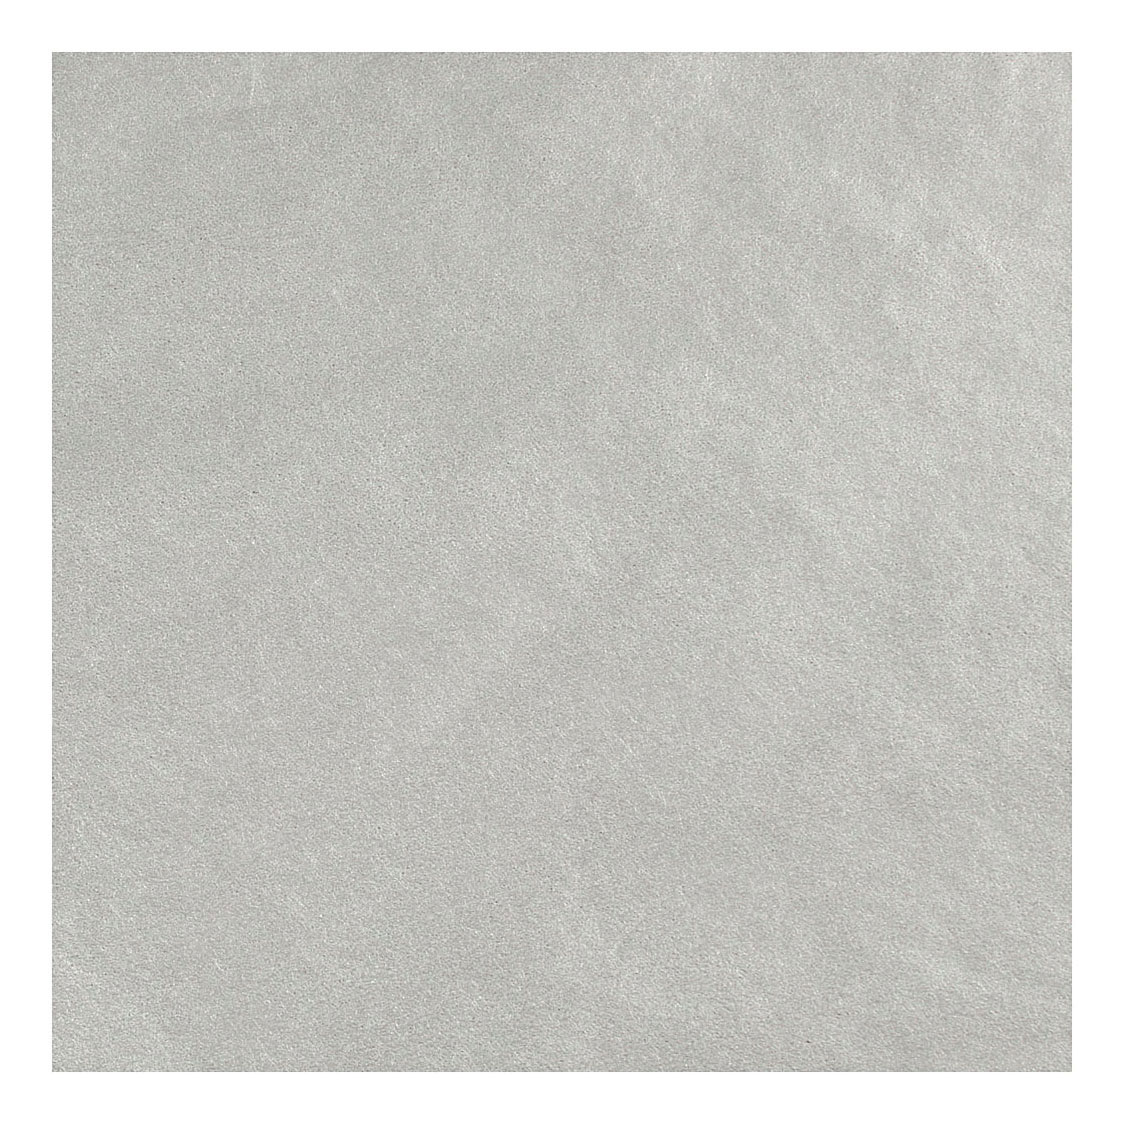 Seidenpapier Silber 6 Blatt 14 gr, 50x70cm